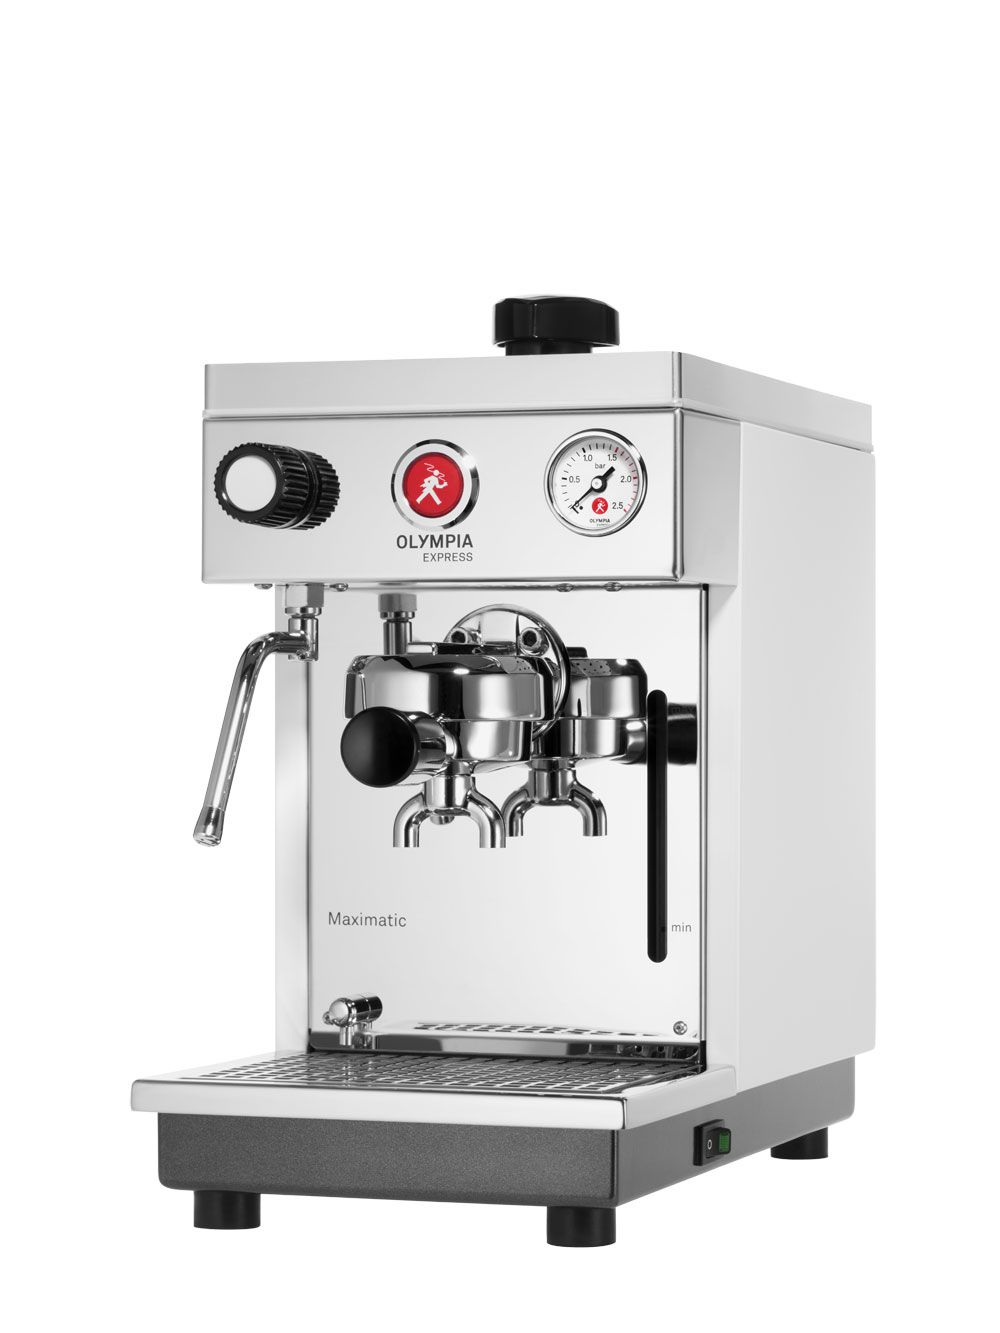 Machine à espresso Olympia Express Maximatic blanche